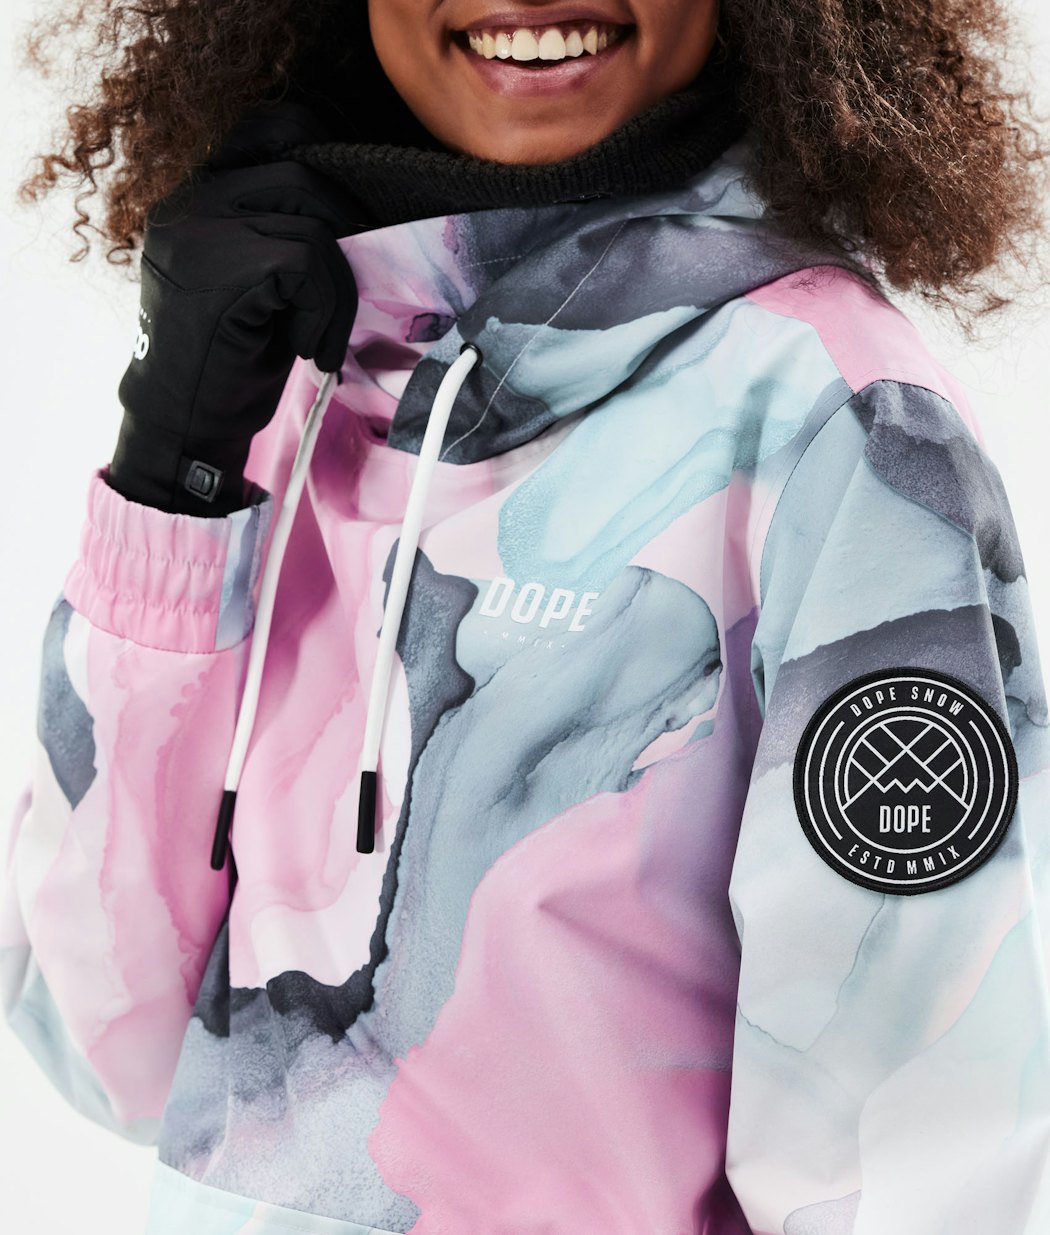 Dope Wylie W Women's Snowboard Jacket Blot